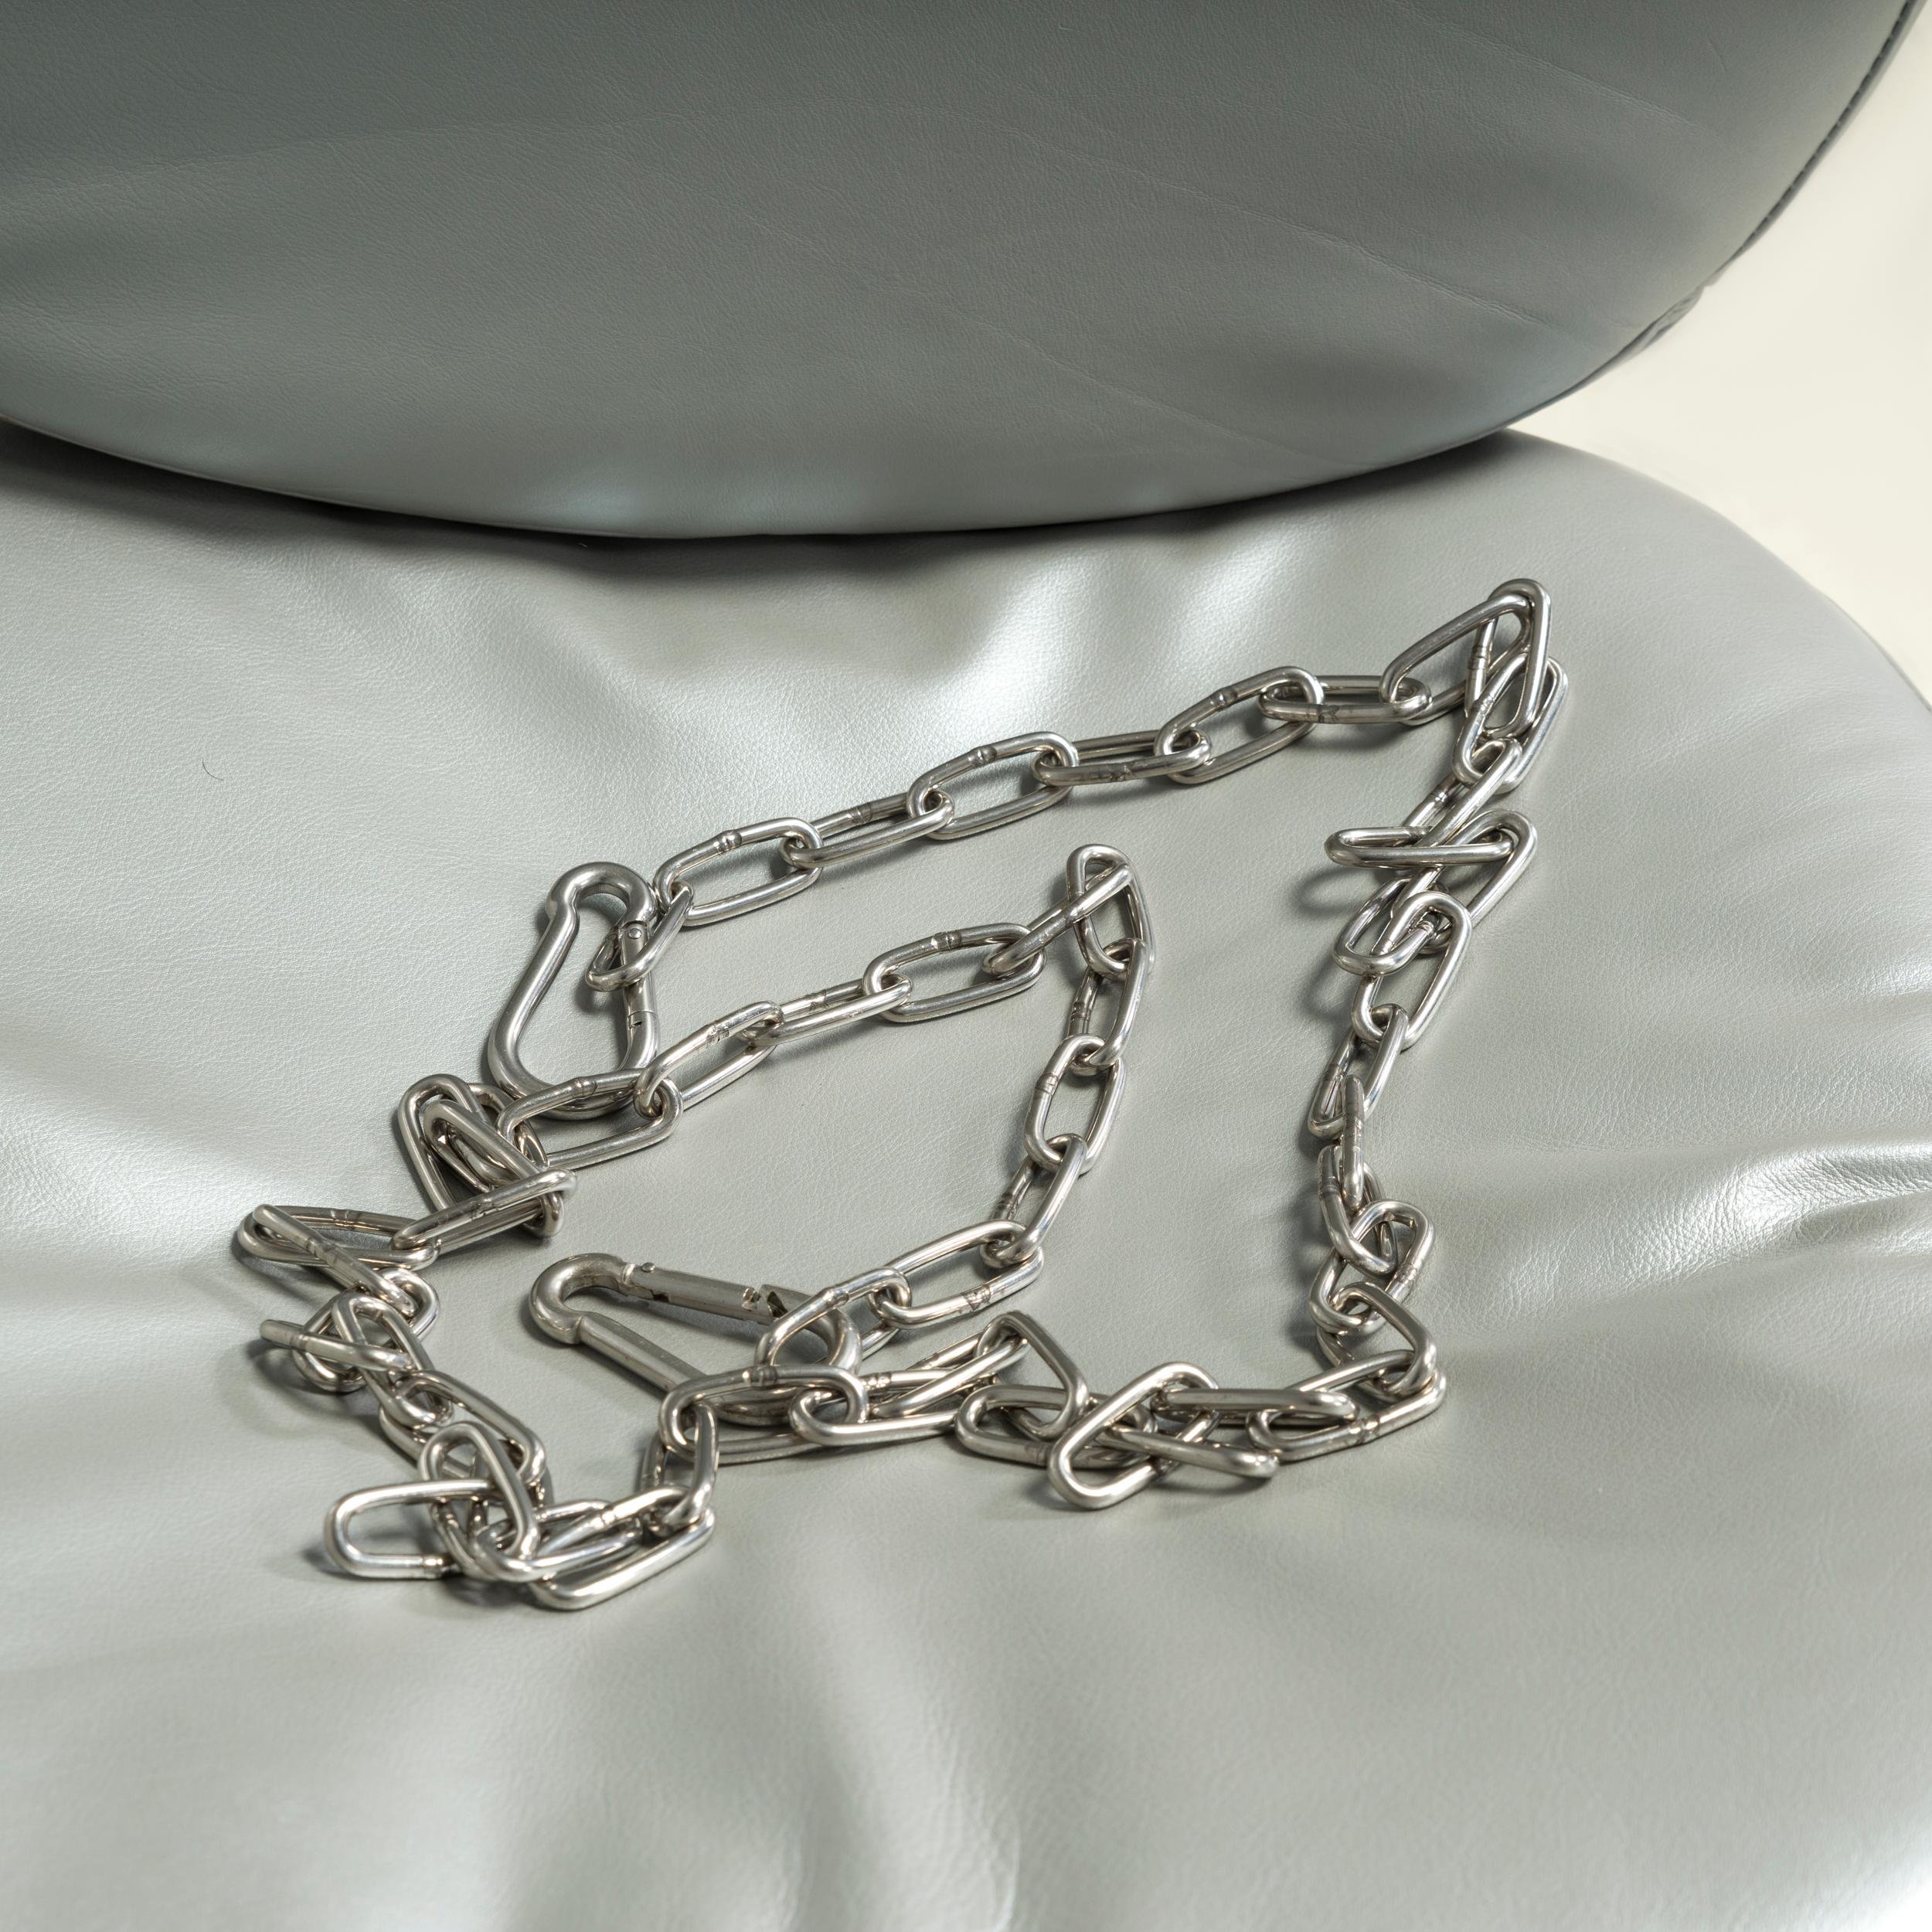 Acrylic Eero Aarnio Originals Silver Leather Bubble Chair, 2017 For Sale